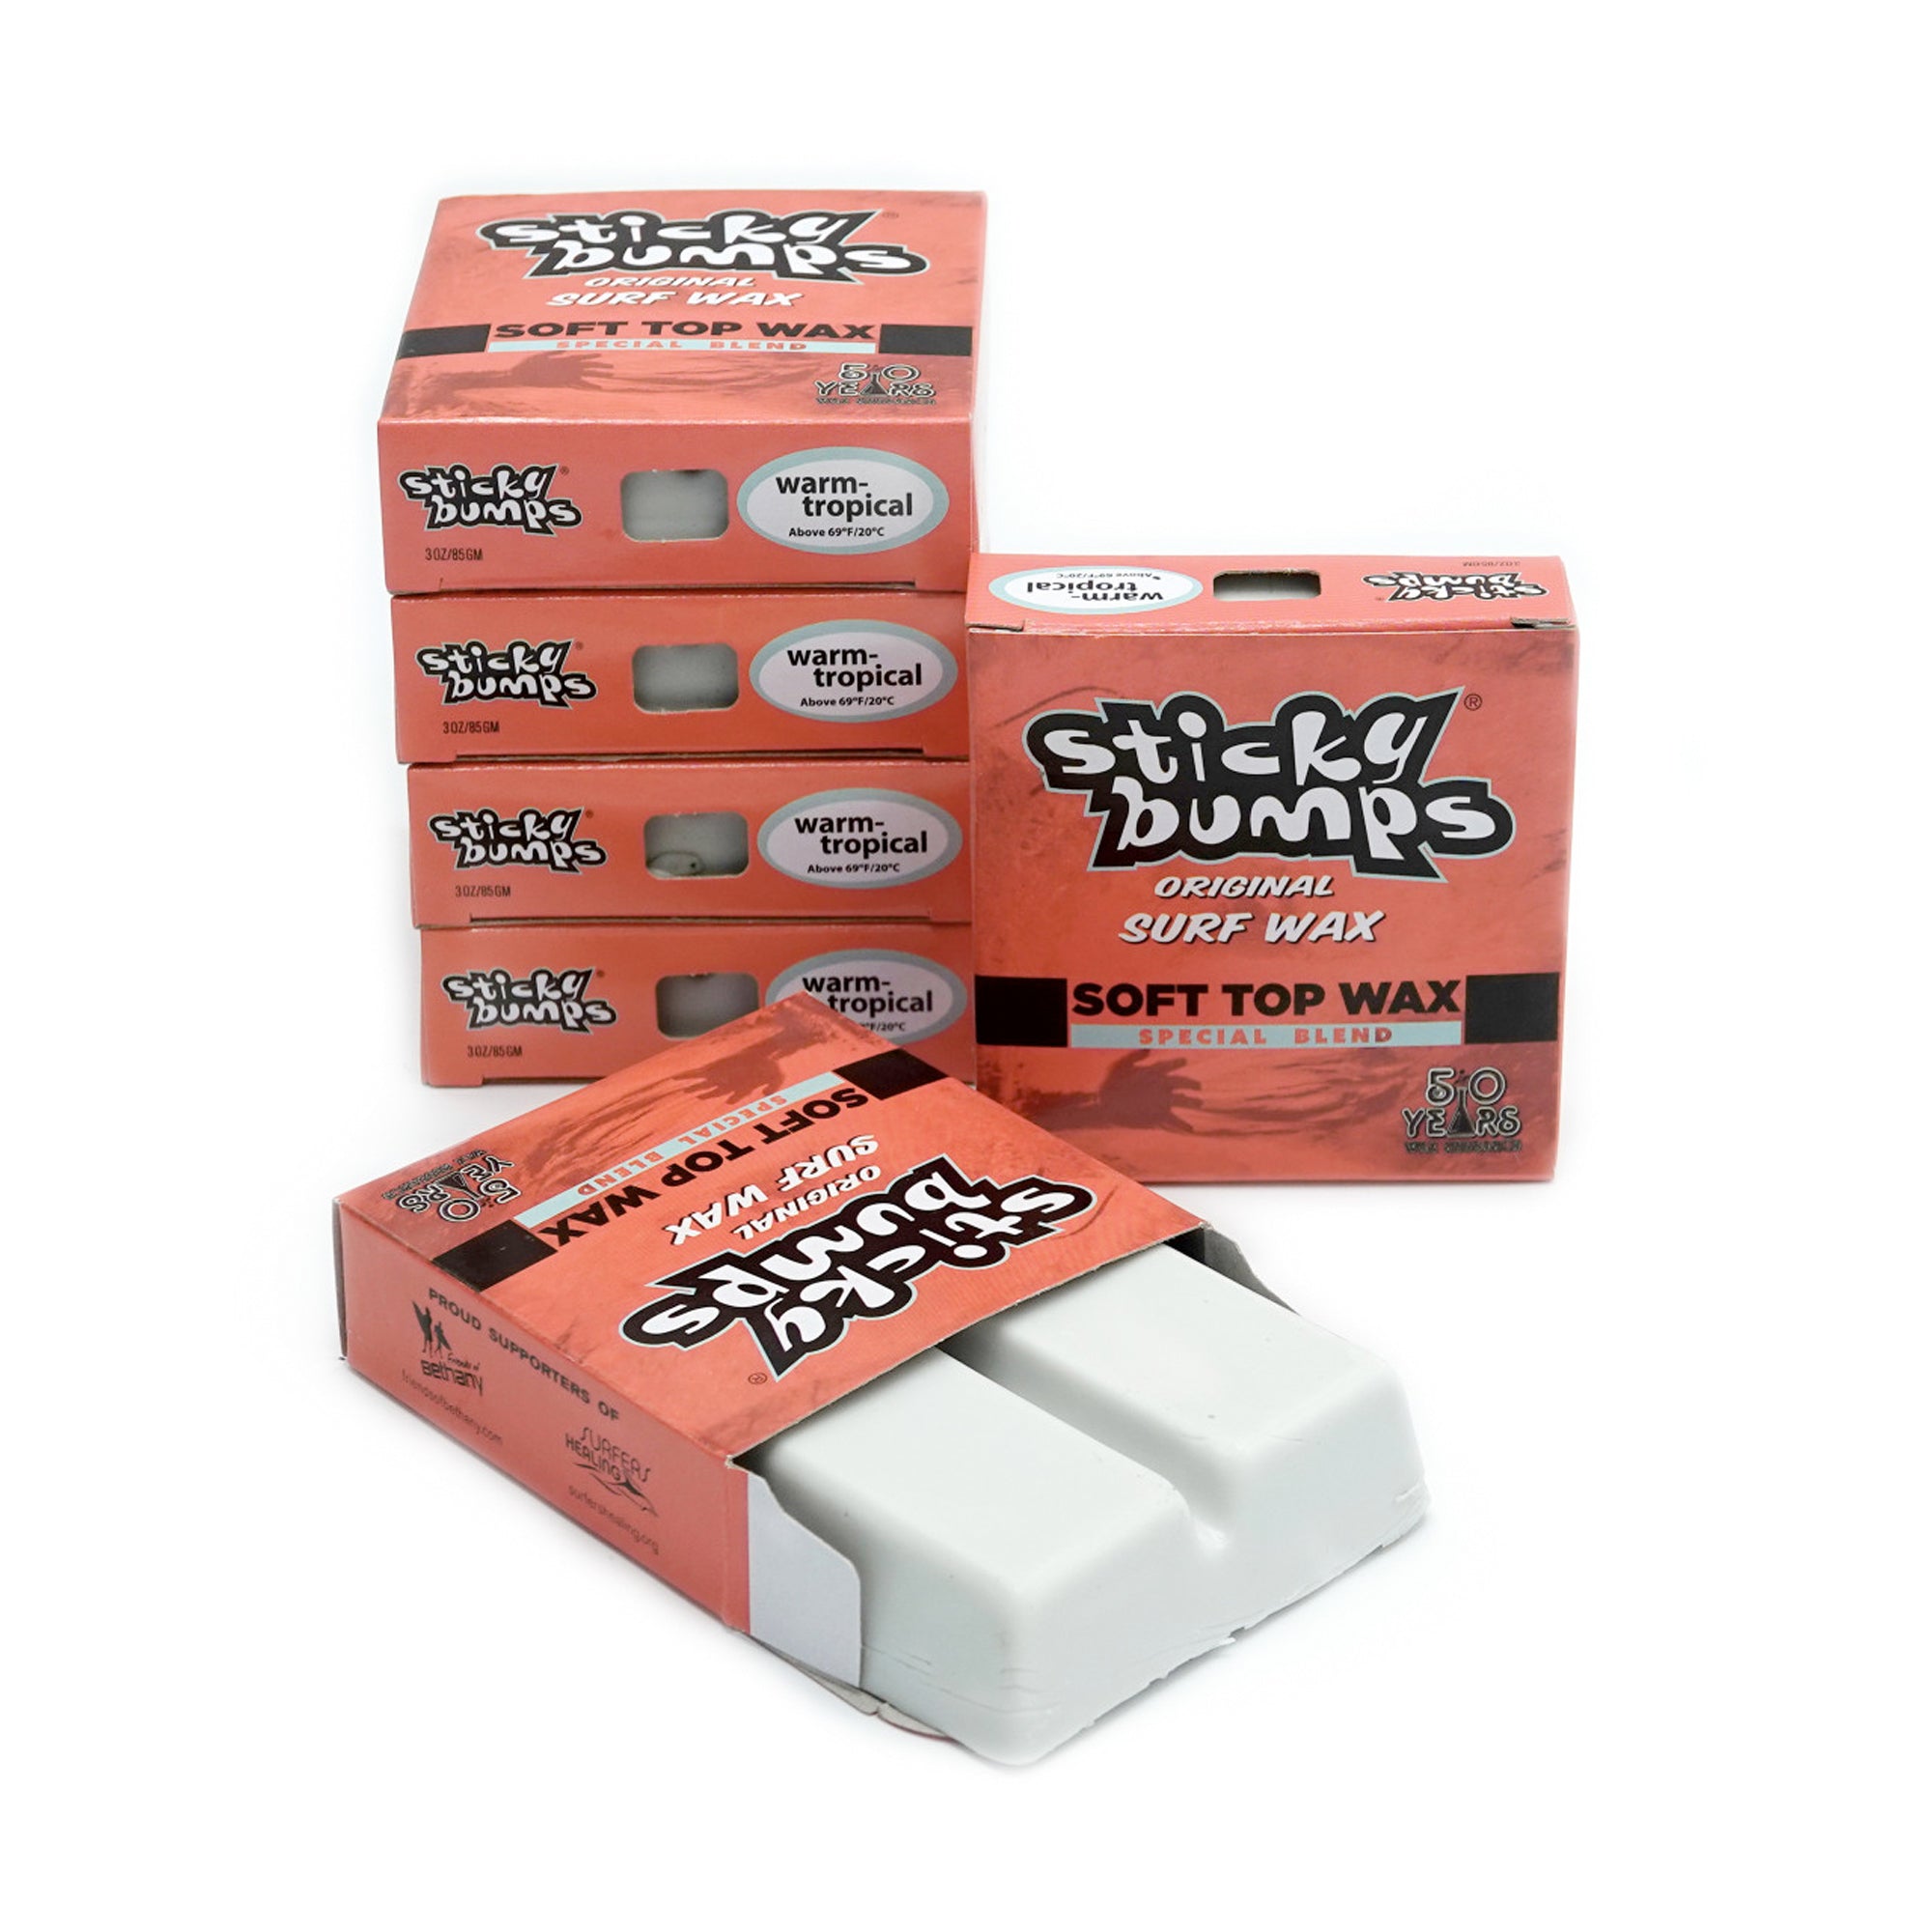 Sticky Bumps Soft Top Special Blend Surf Wax - Warm